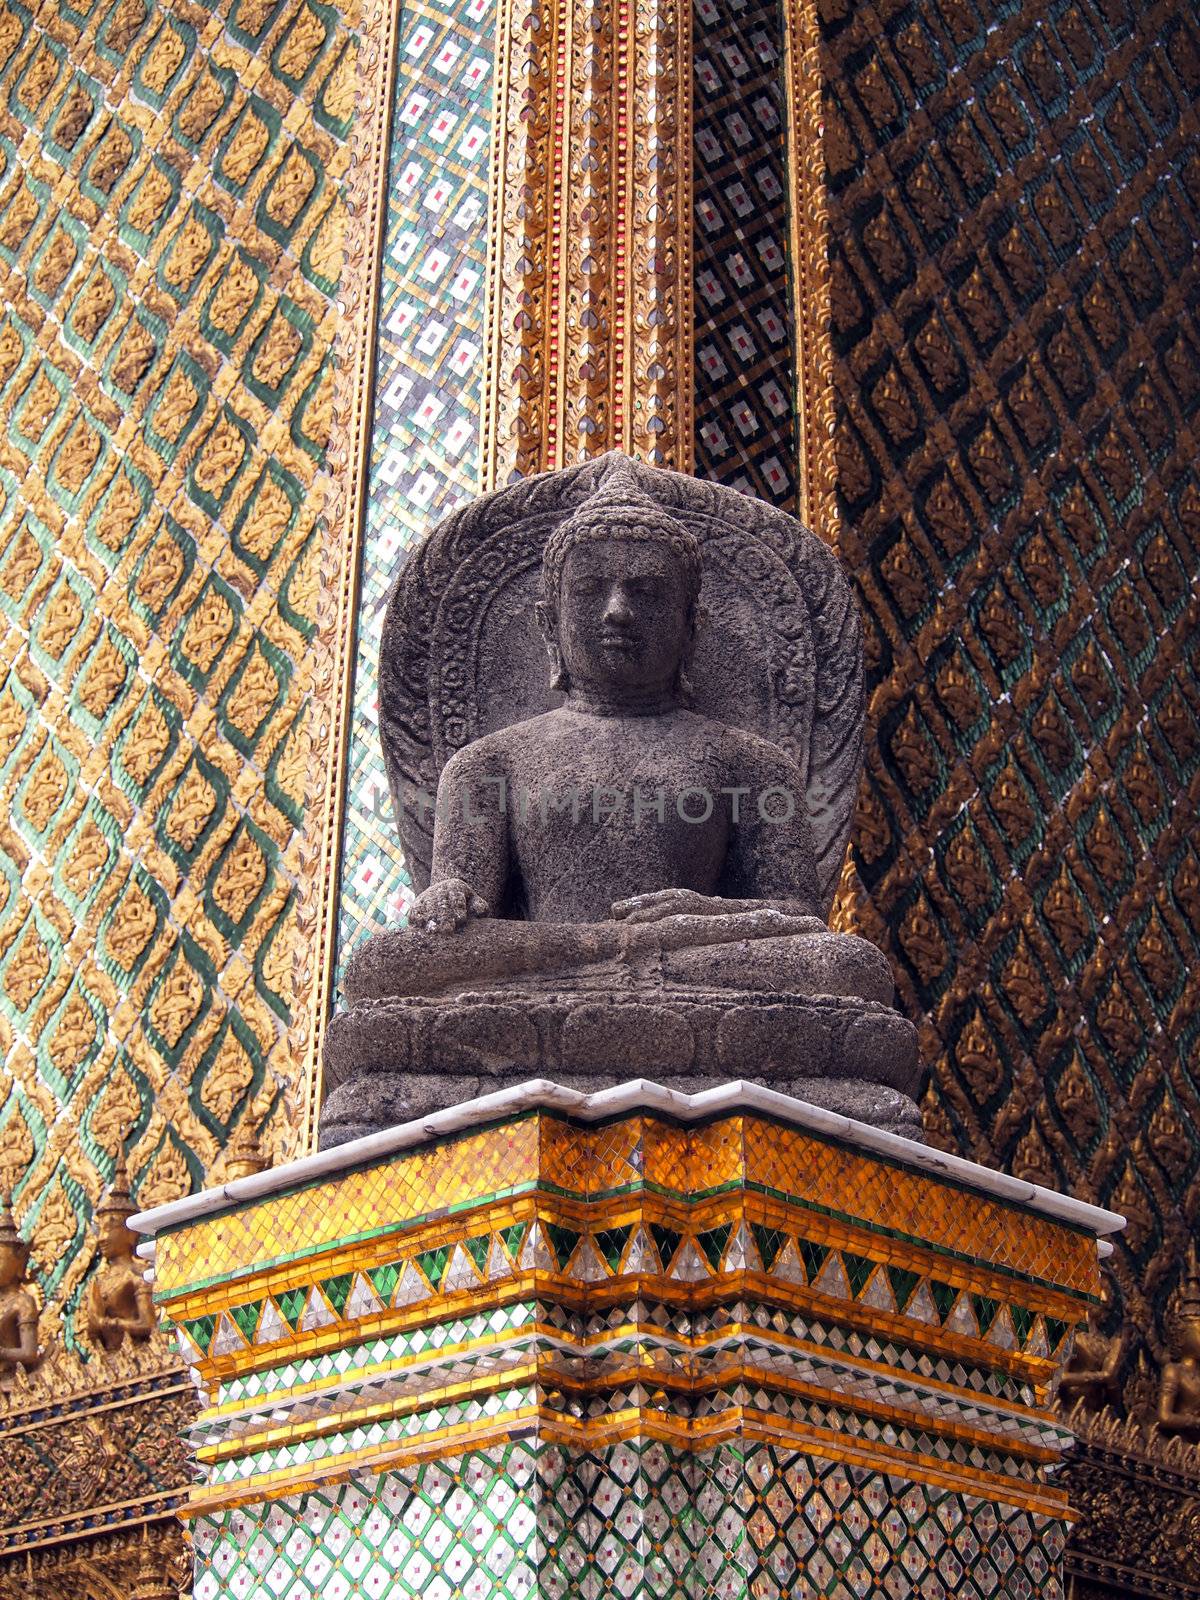 Buddha in Wat Phra Kaew (Temple of the Emerald Buddha), Bangkok Thailand.    